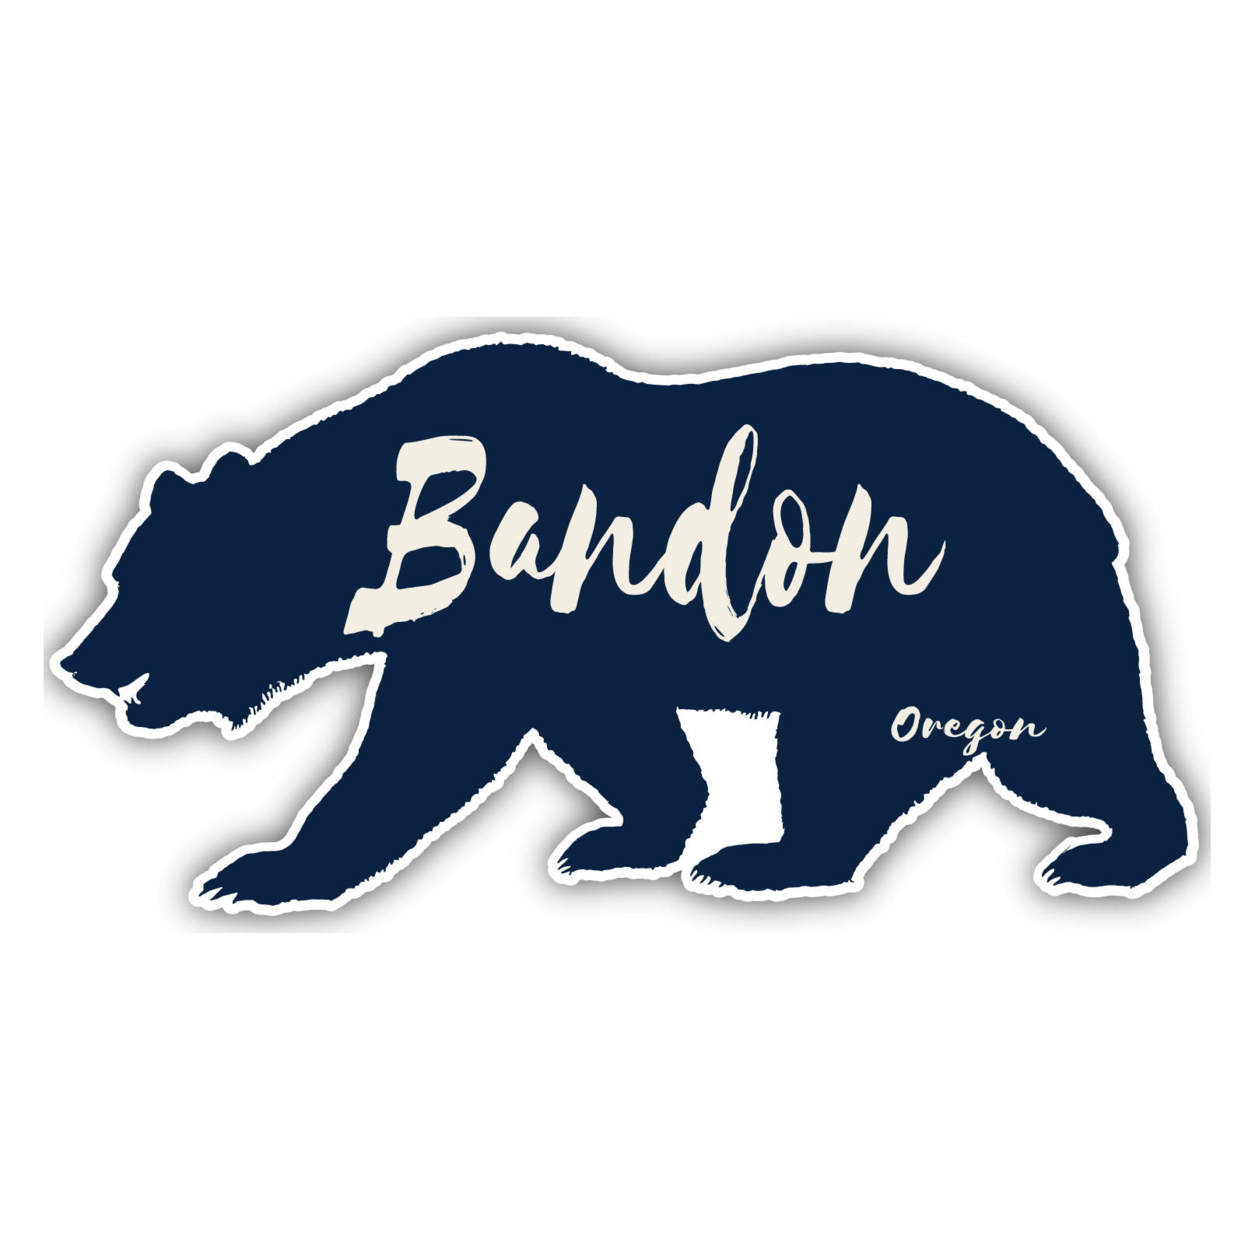 Bandon Oregon Souvenir Decorative Stickers (Choose Theme And Size) - 4-Pack, 2-Inch, Bear